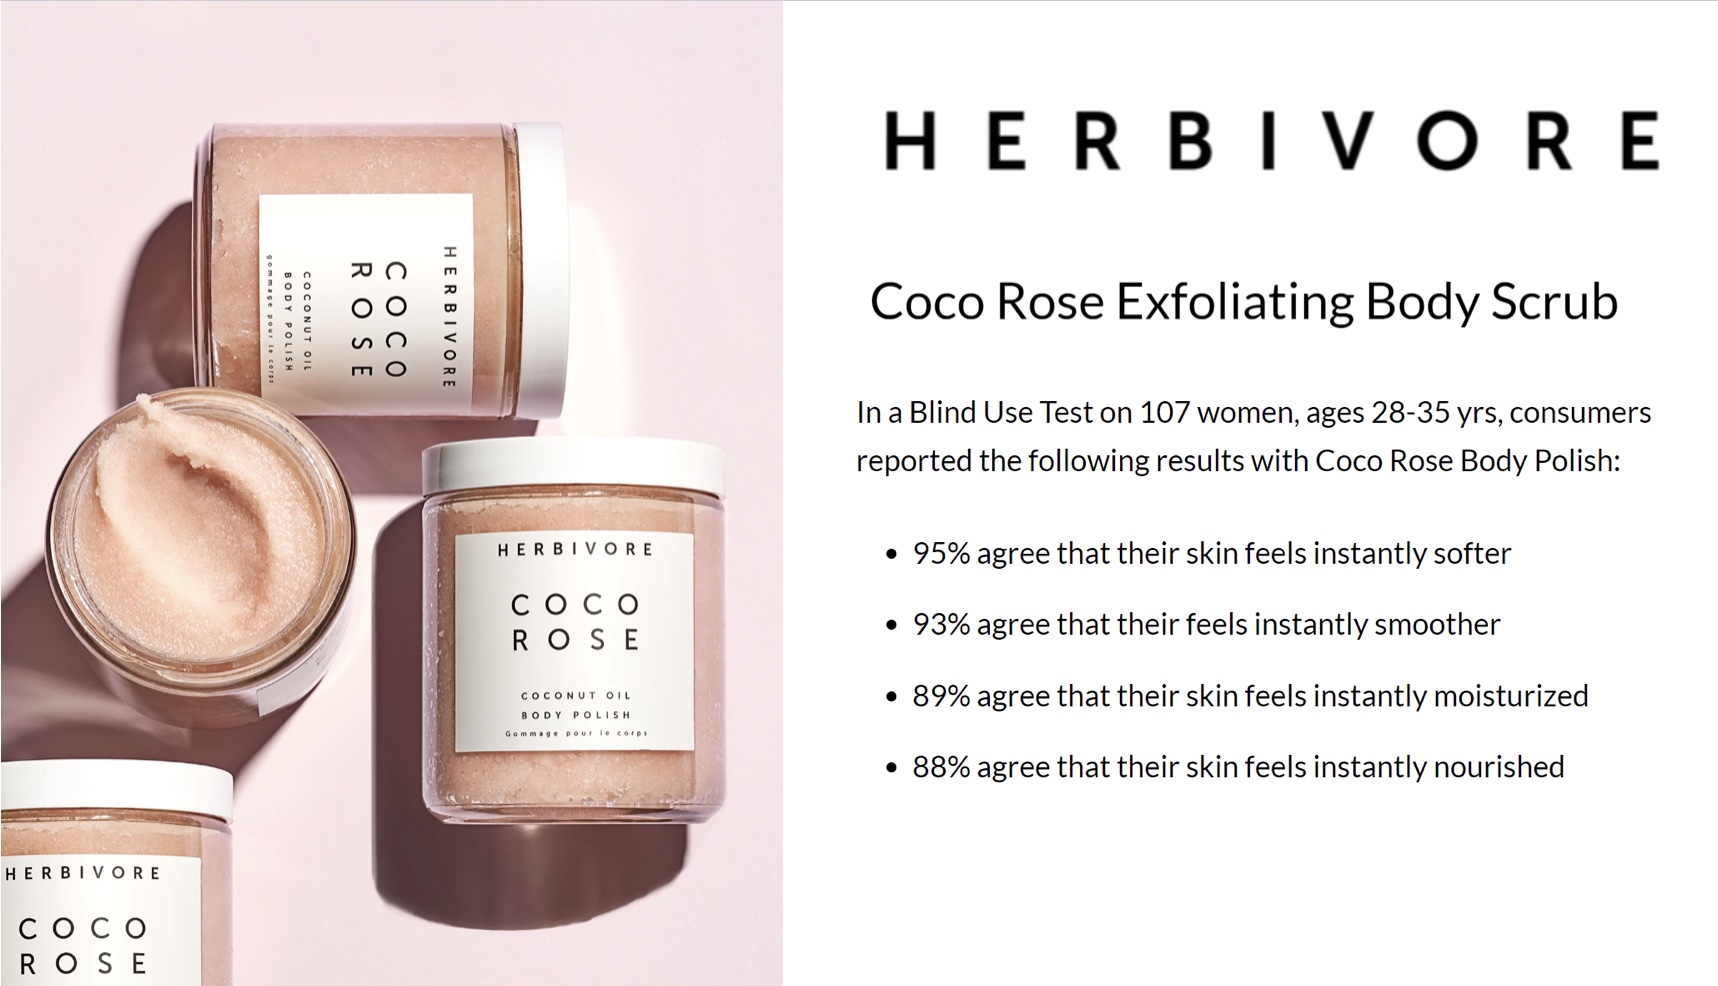 Herbivore - Coco Rose Exfoliating Body Scrub - Claims in Action